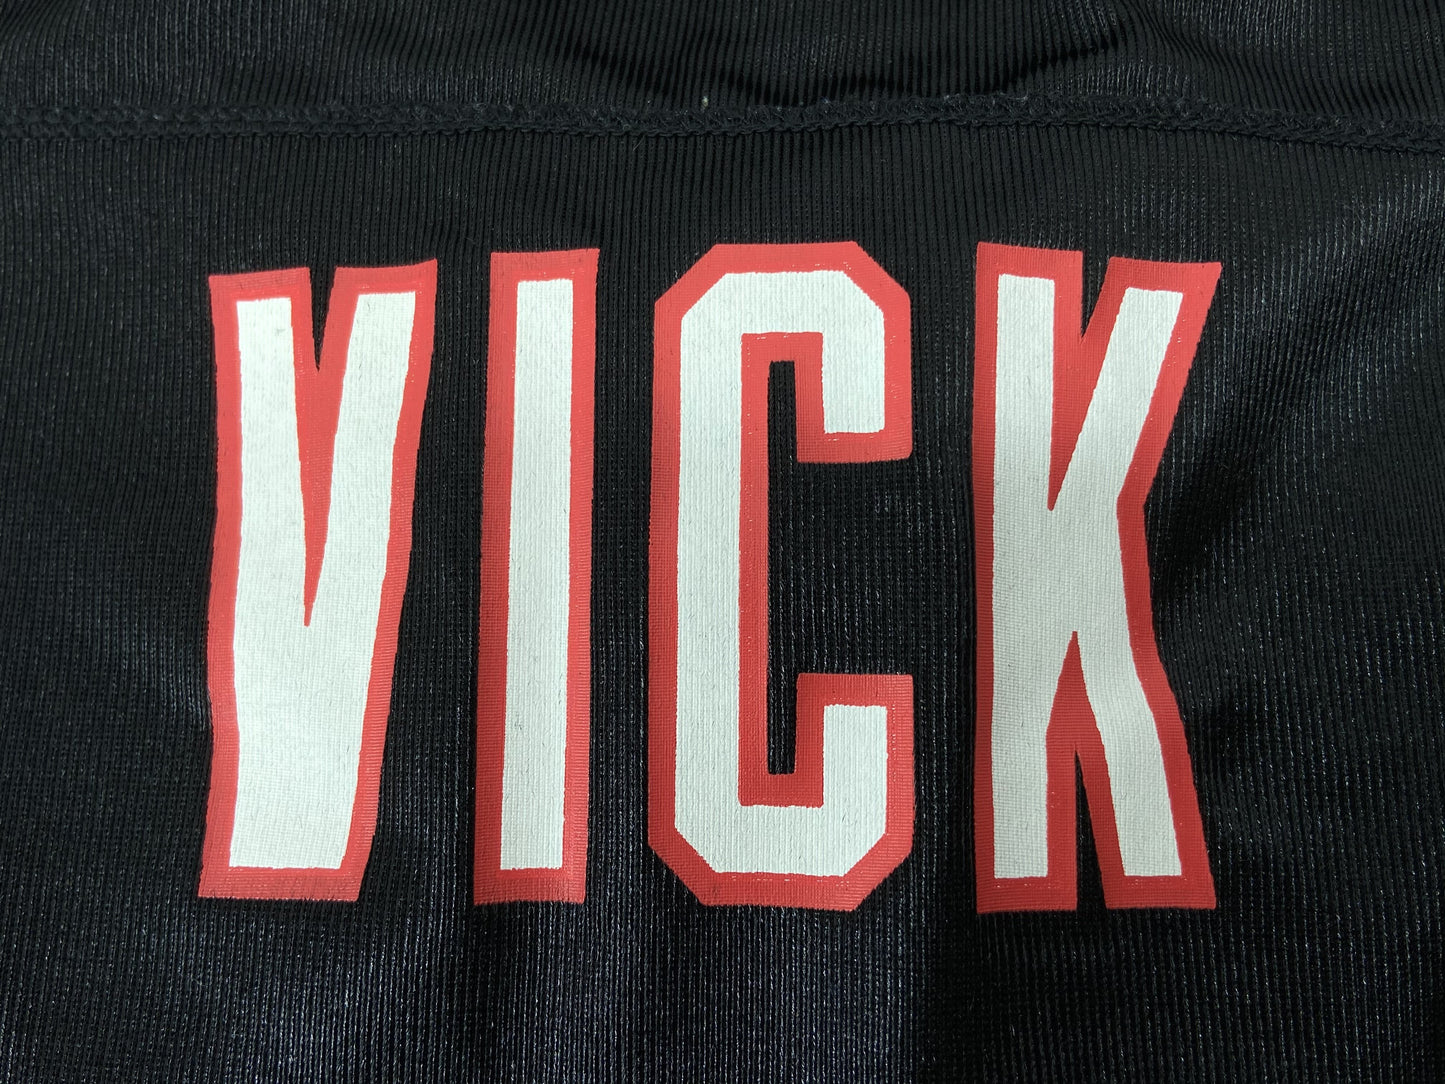 Michael Vick NFL Atlanta Falcons #7 Print Jersey Size Large Used